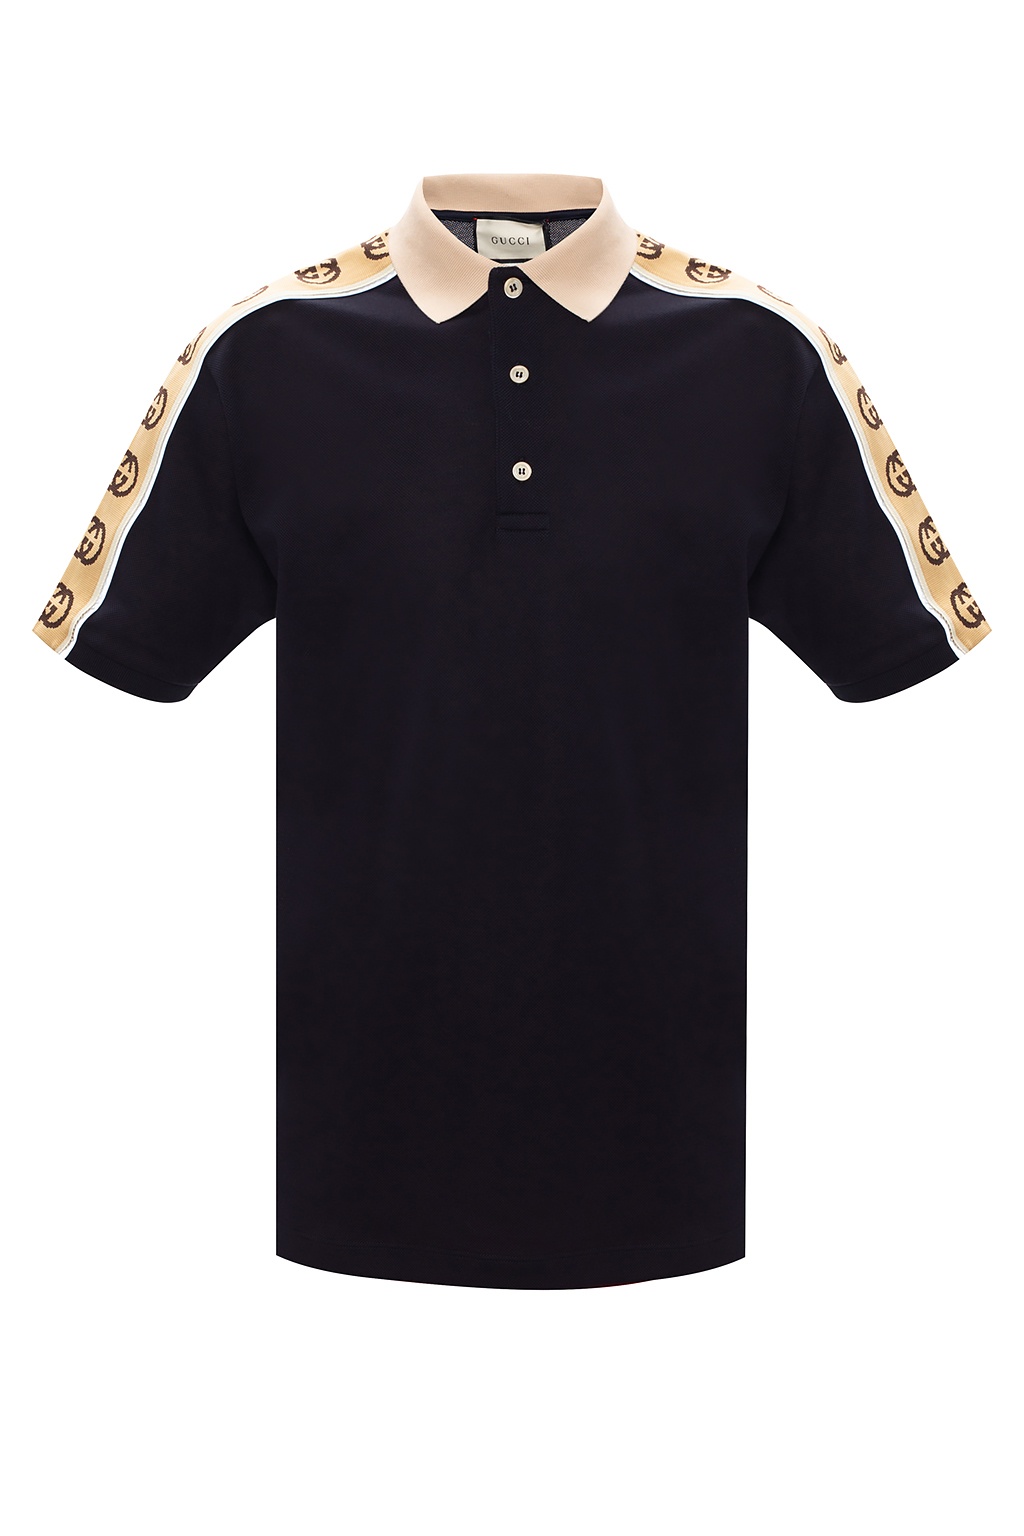 GUCCI Polo Shirt Navy Blue for boys